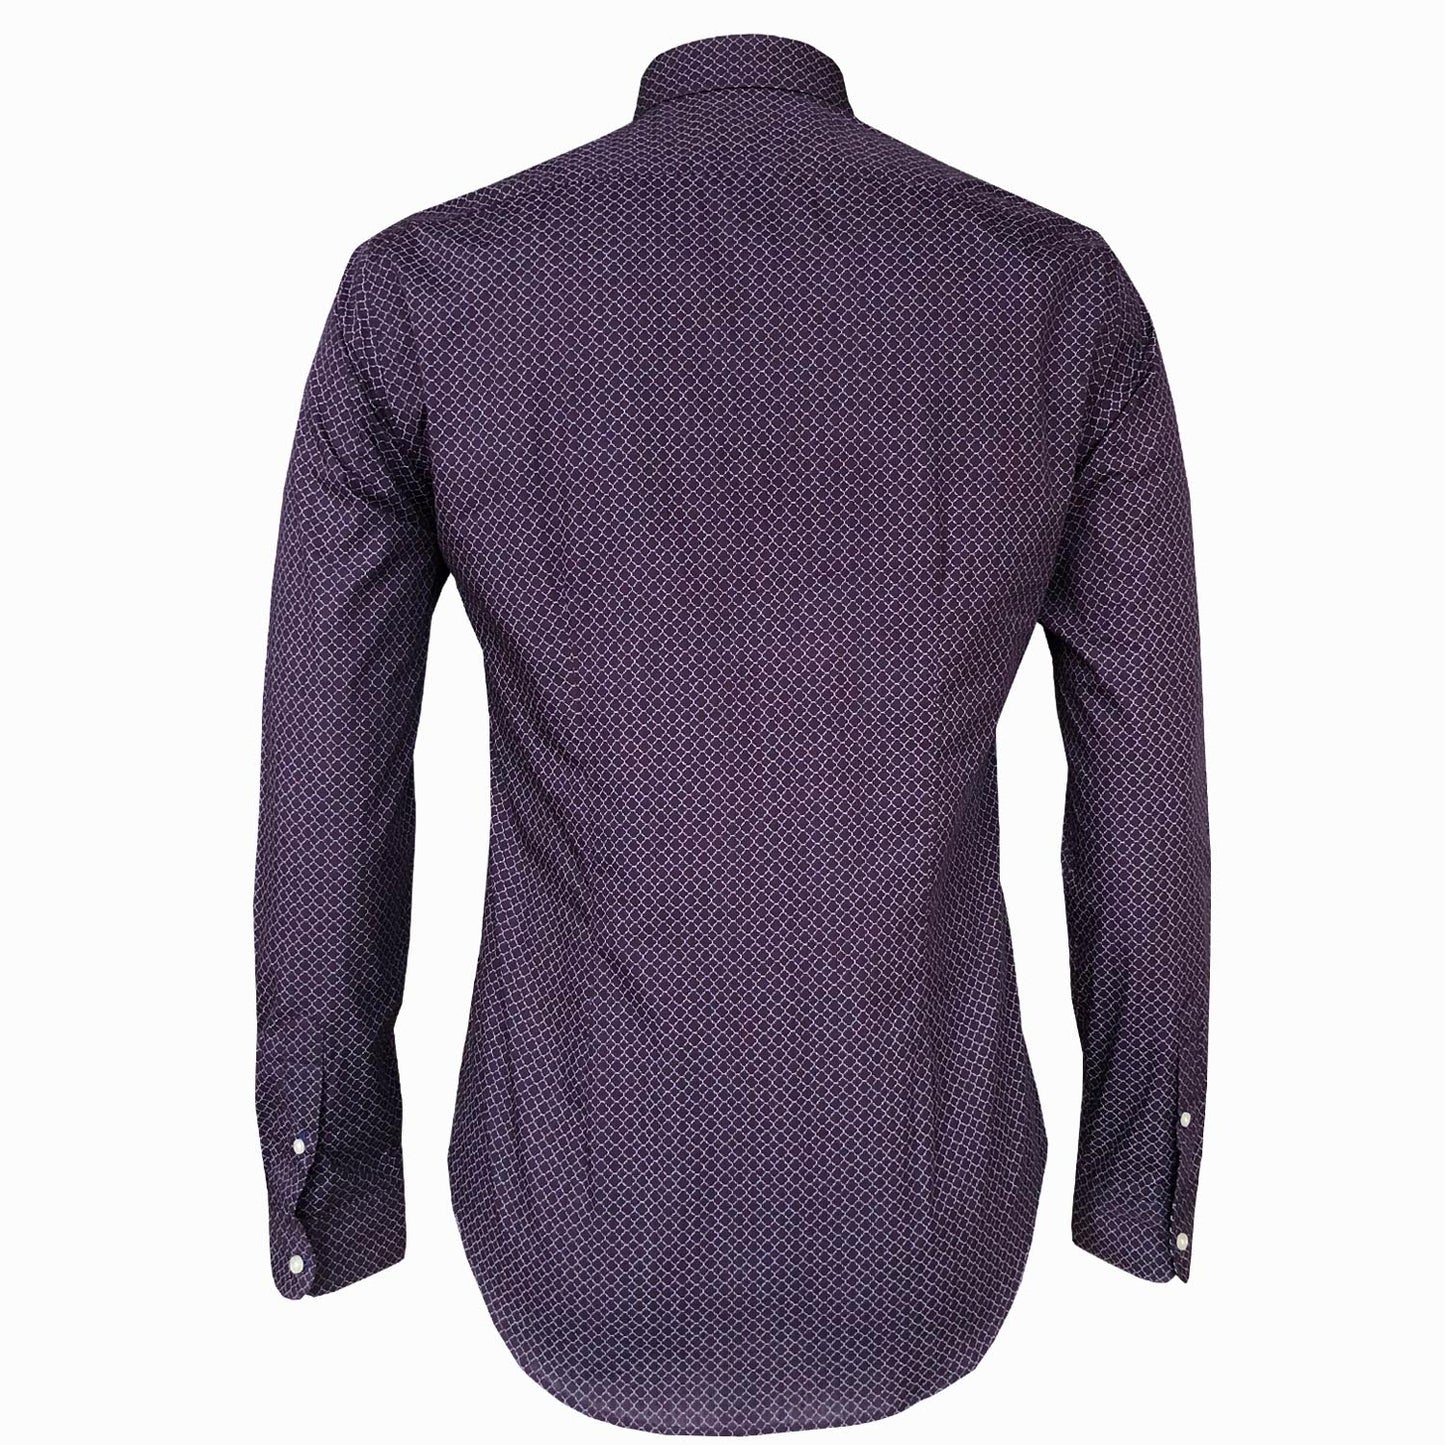 LUXE HOMME SELECT - Premium Oxford Long Sleeve Shirt (Conroy) - LabelledUp.com